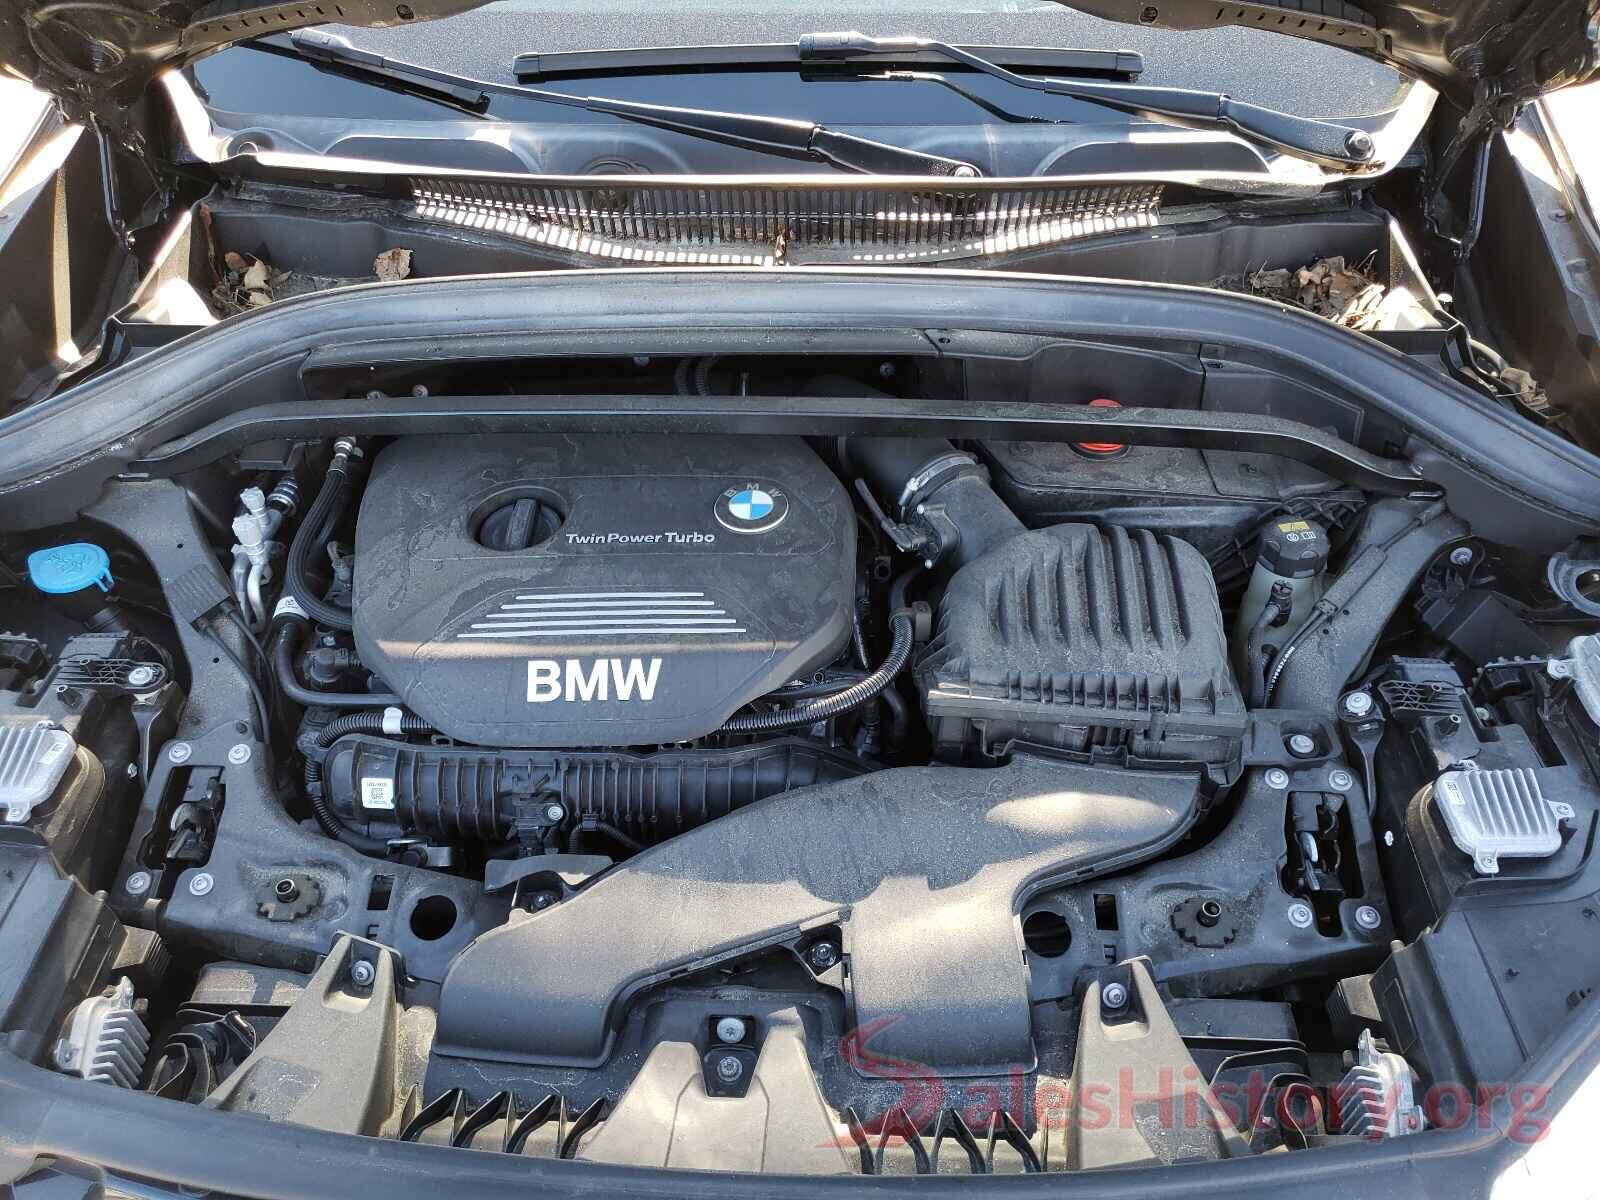 WBXHT3C32J5L28125 2018 BMW X1